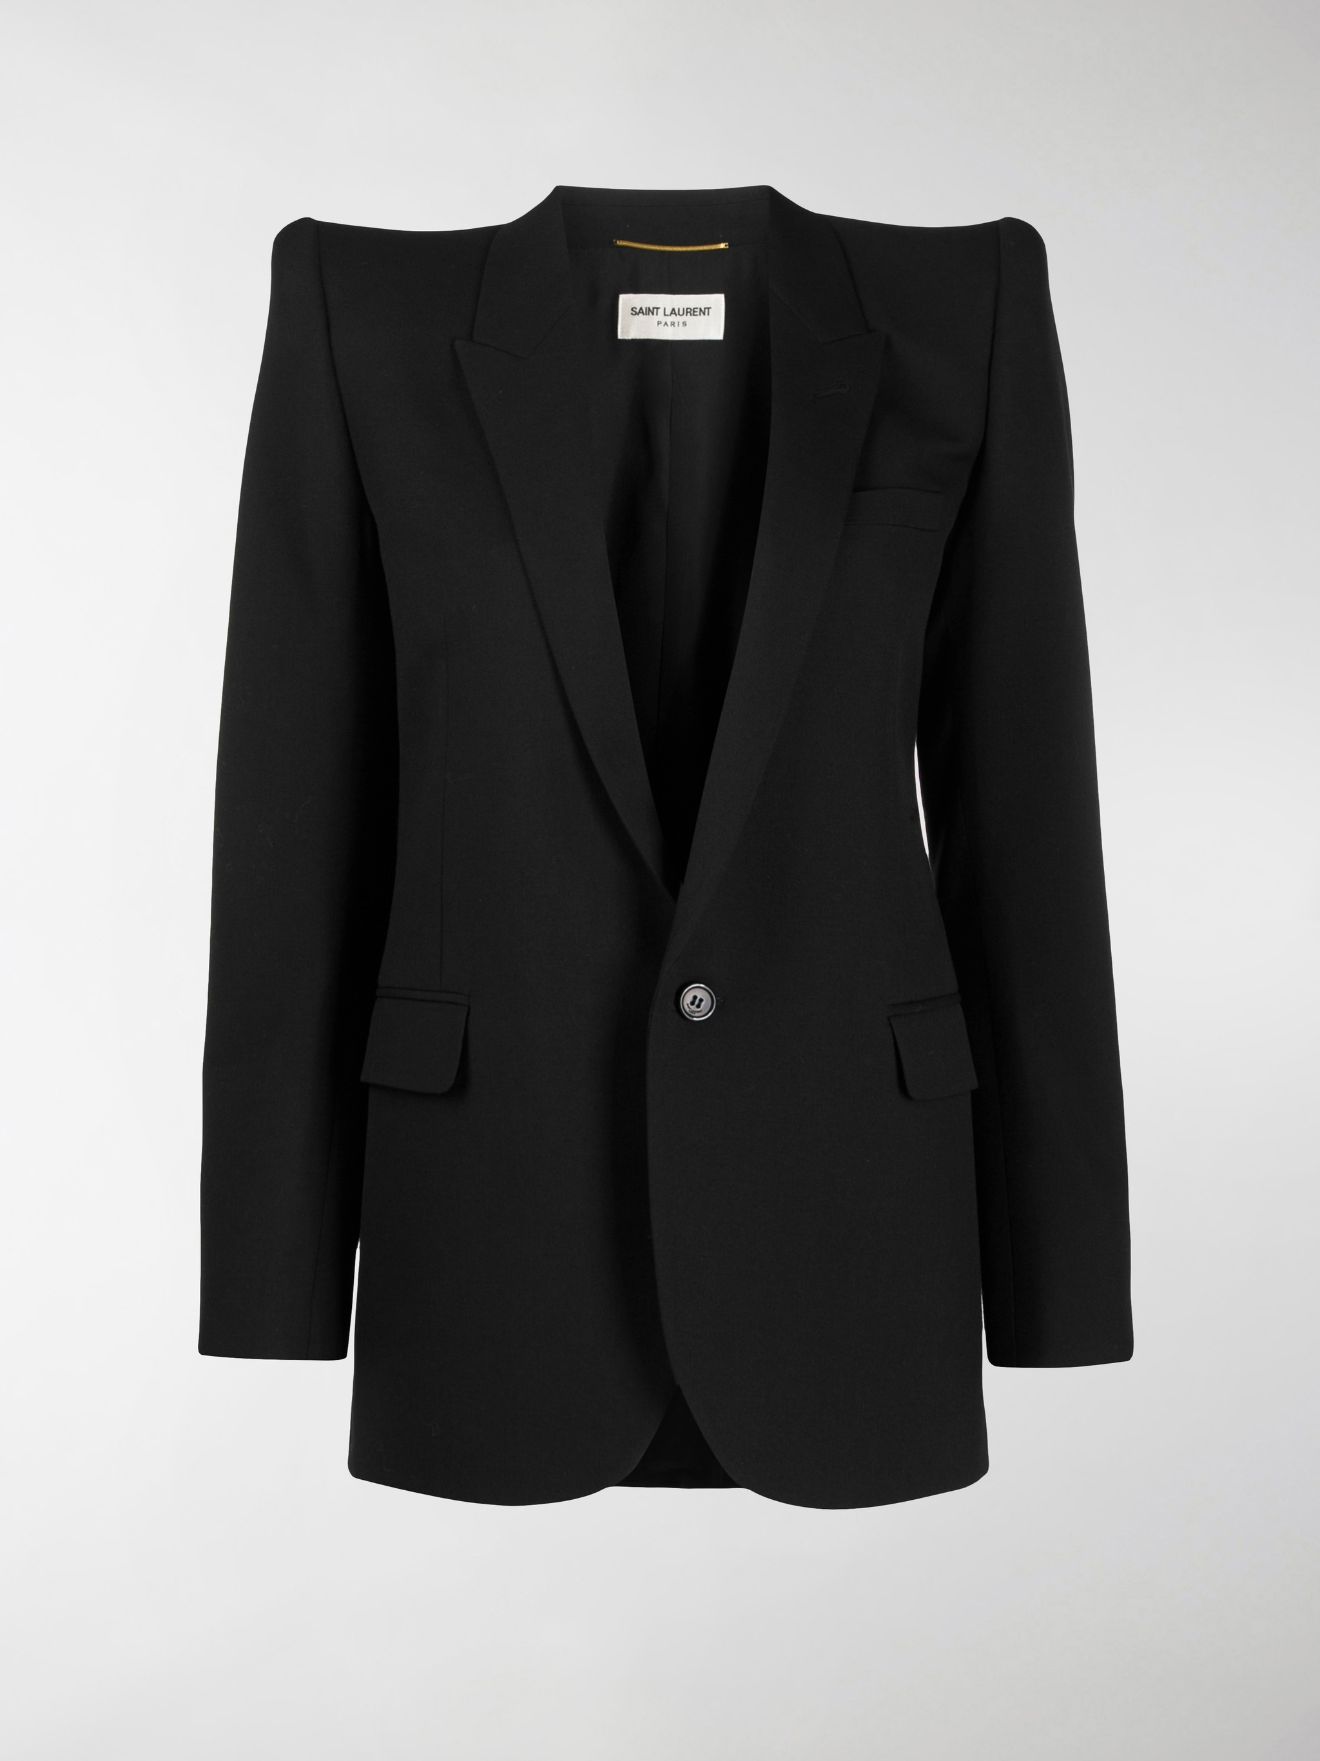 Saint Laurent exaggerated-shoulder blazer black | MODES